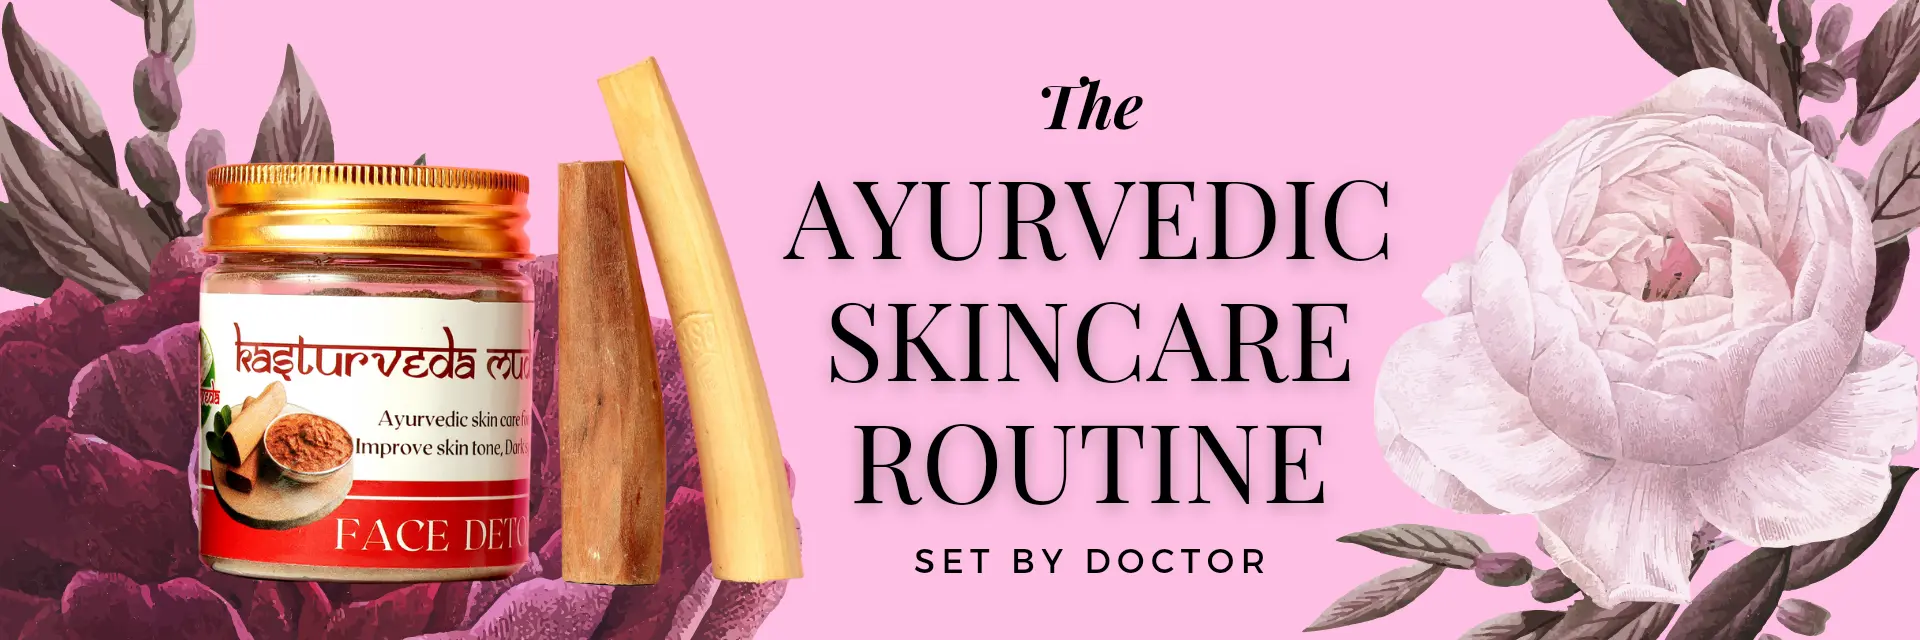 ayurvedic skin care routine